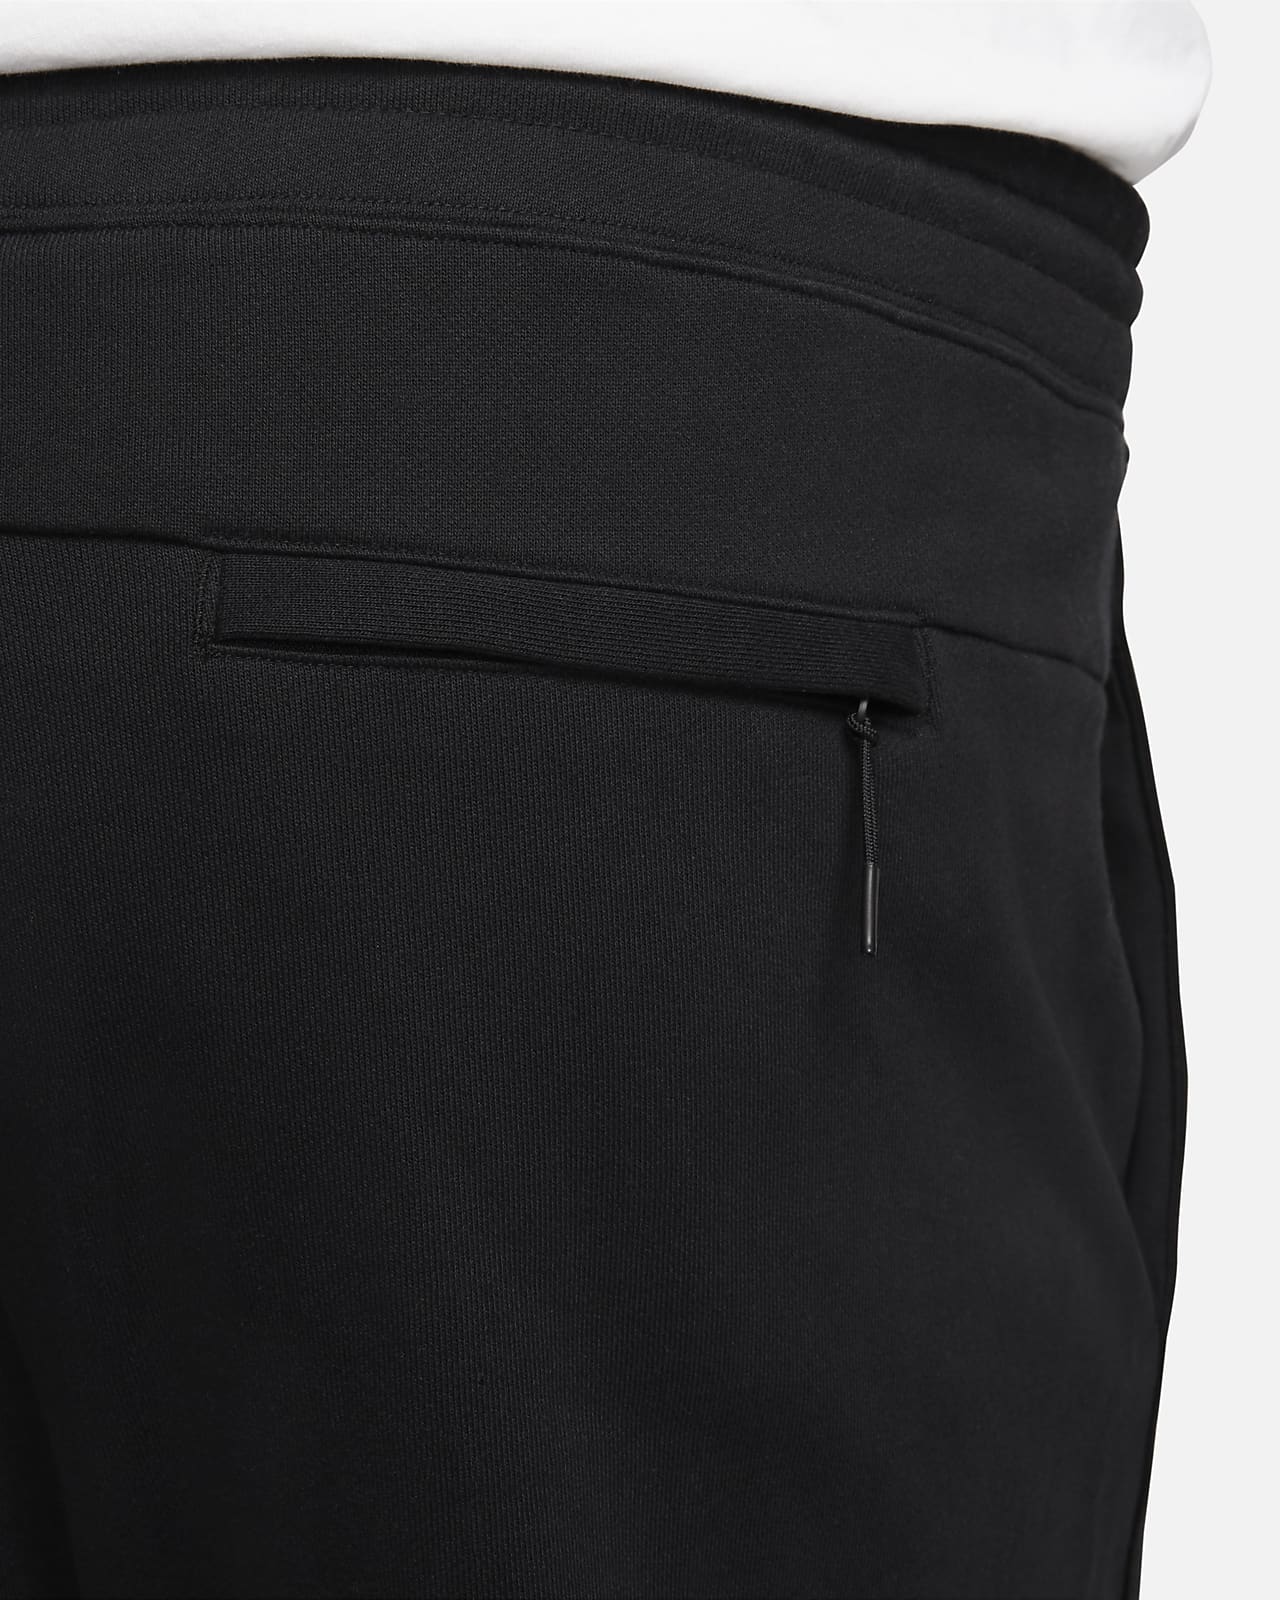 Nike Men's Sportswear Swoosh Pants Black White Size XXL Standard Fit Brand  New